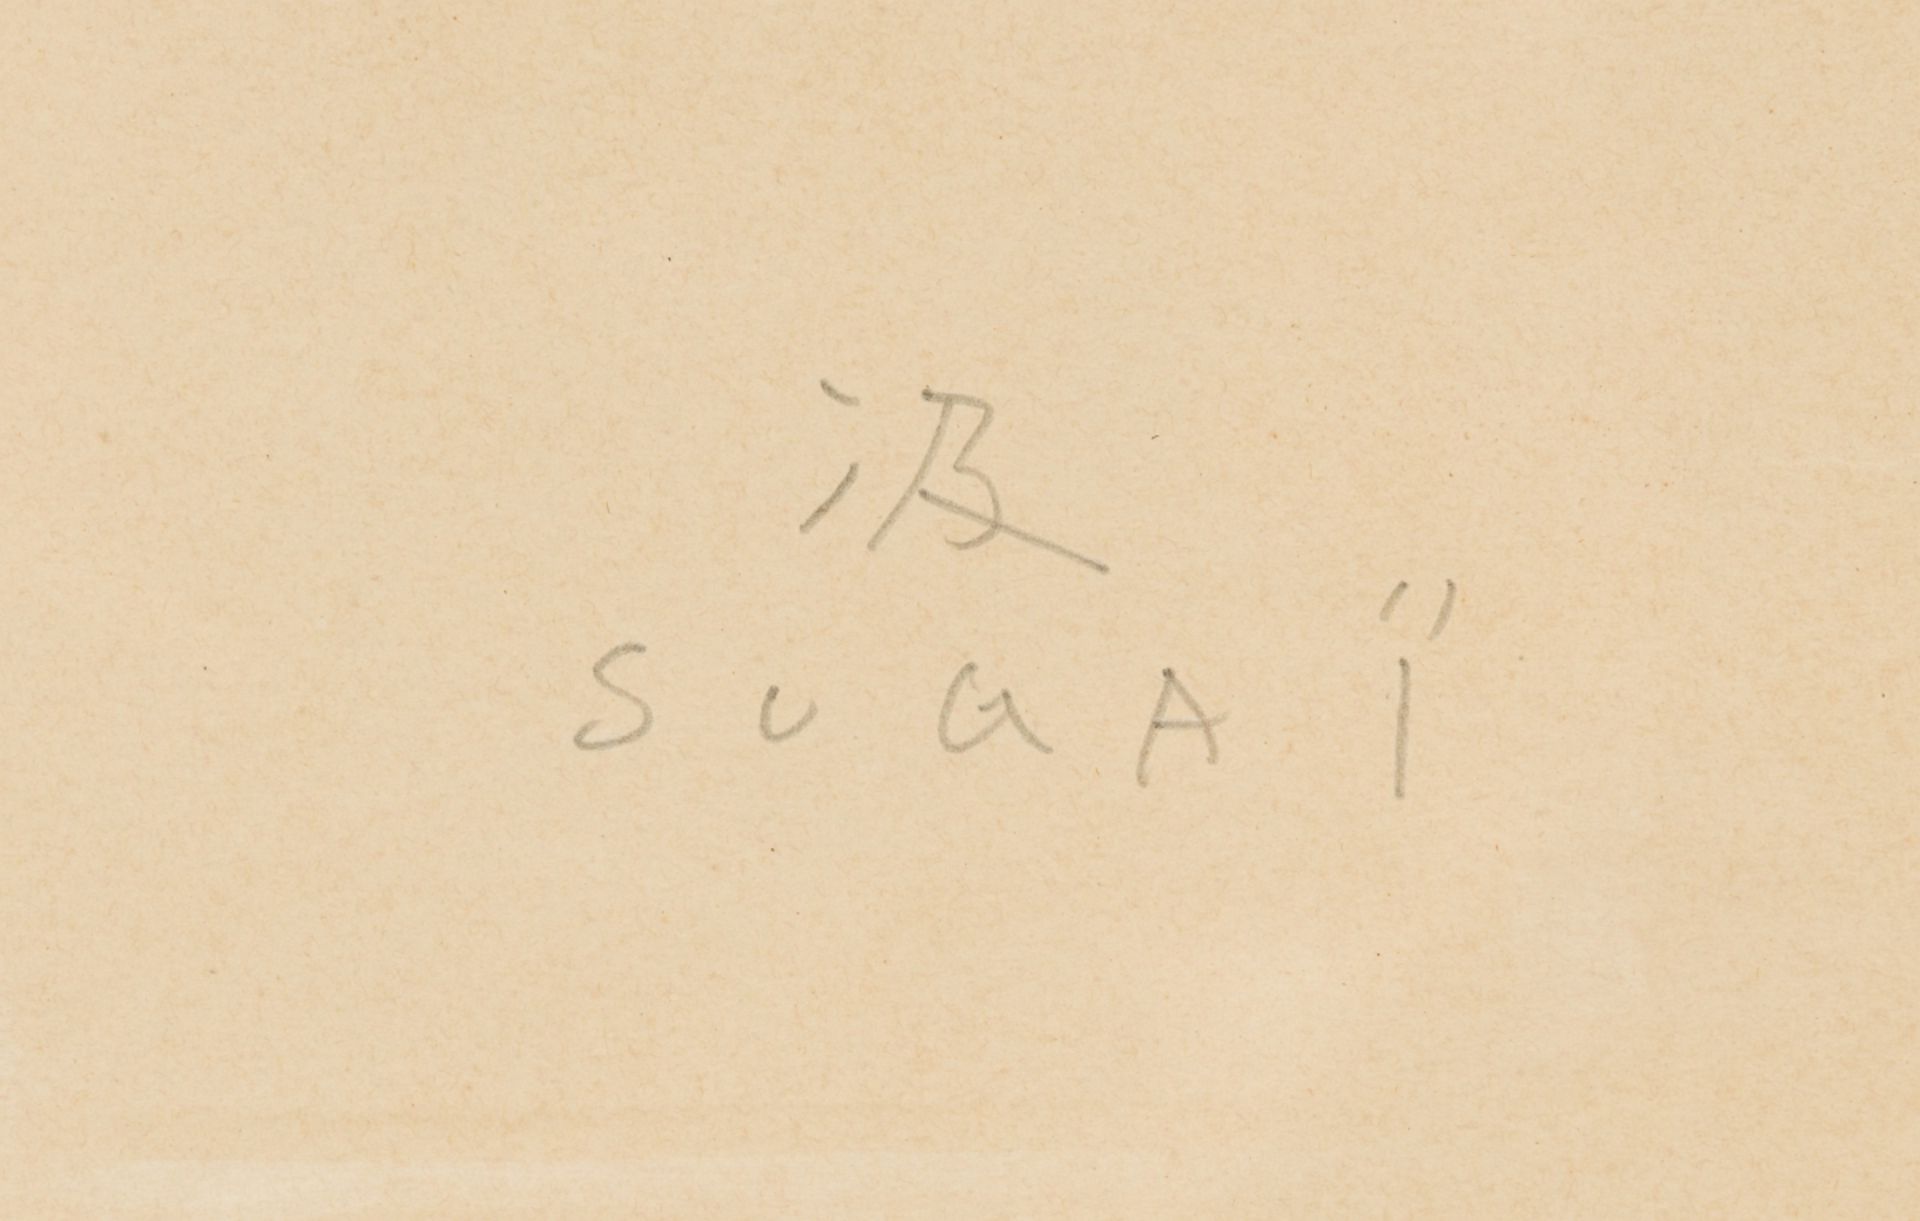 Sugai, Kumi - Bild 3 aus 3